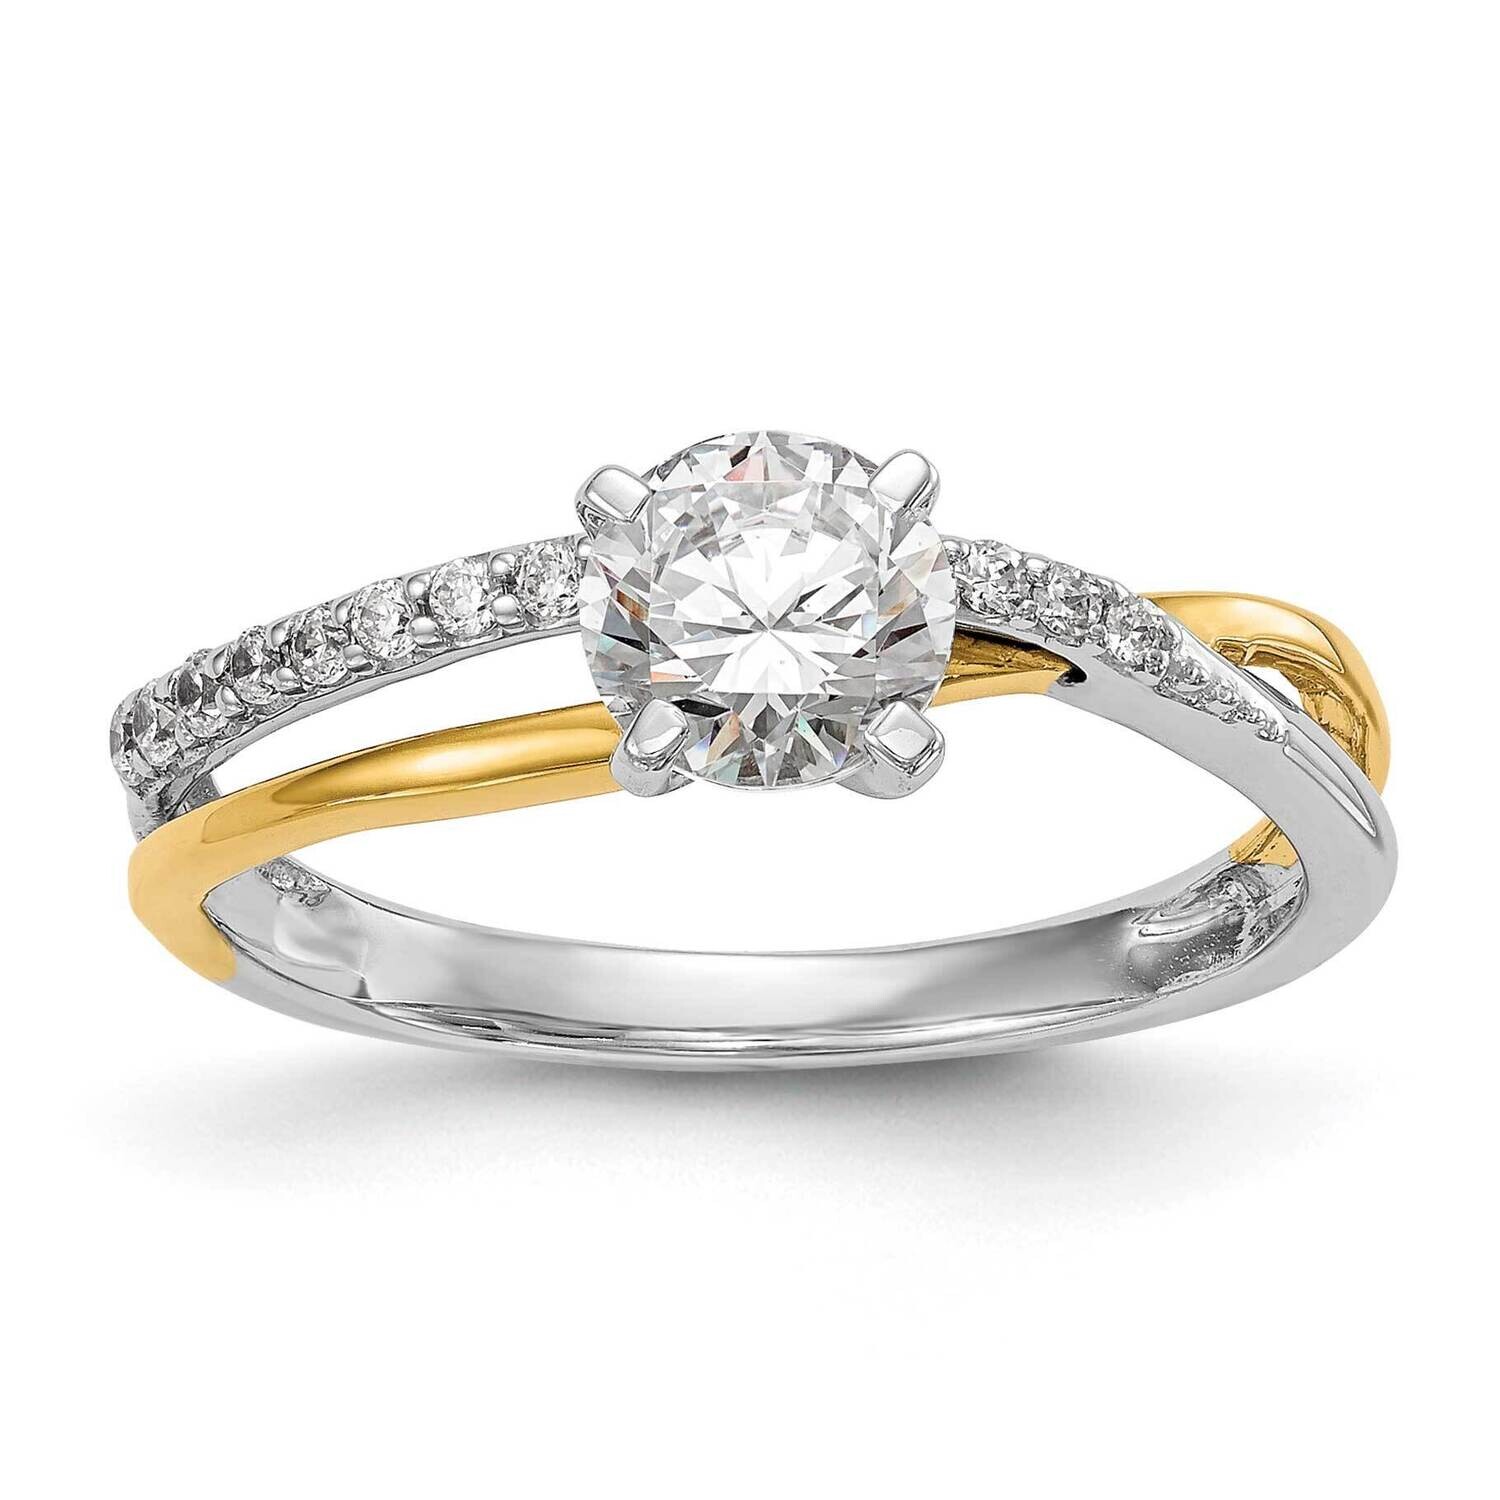 By-Pass Peg Set 1/8 Carat Diamond Semi-Mount Engagement Ring 14k Two-Tone Gold RM2457E-013-YWAA